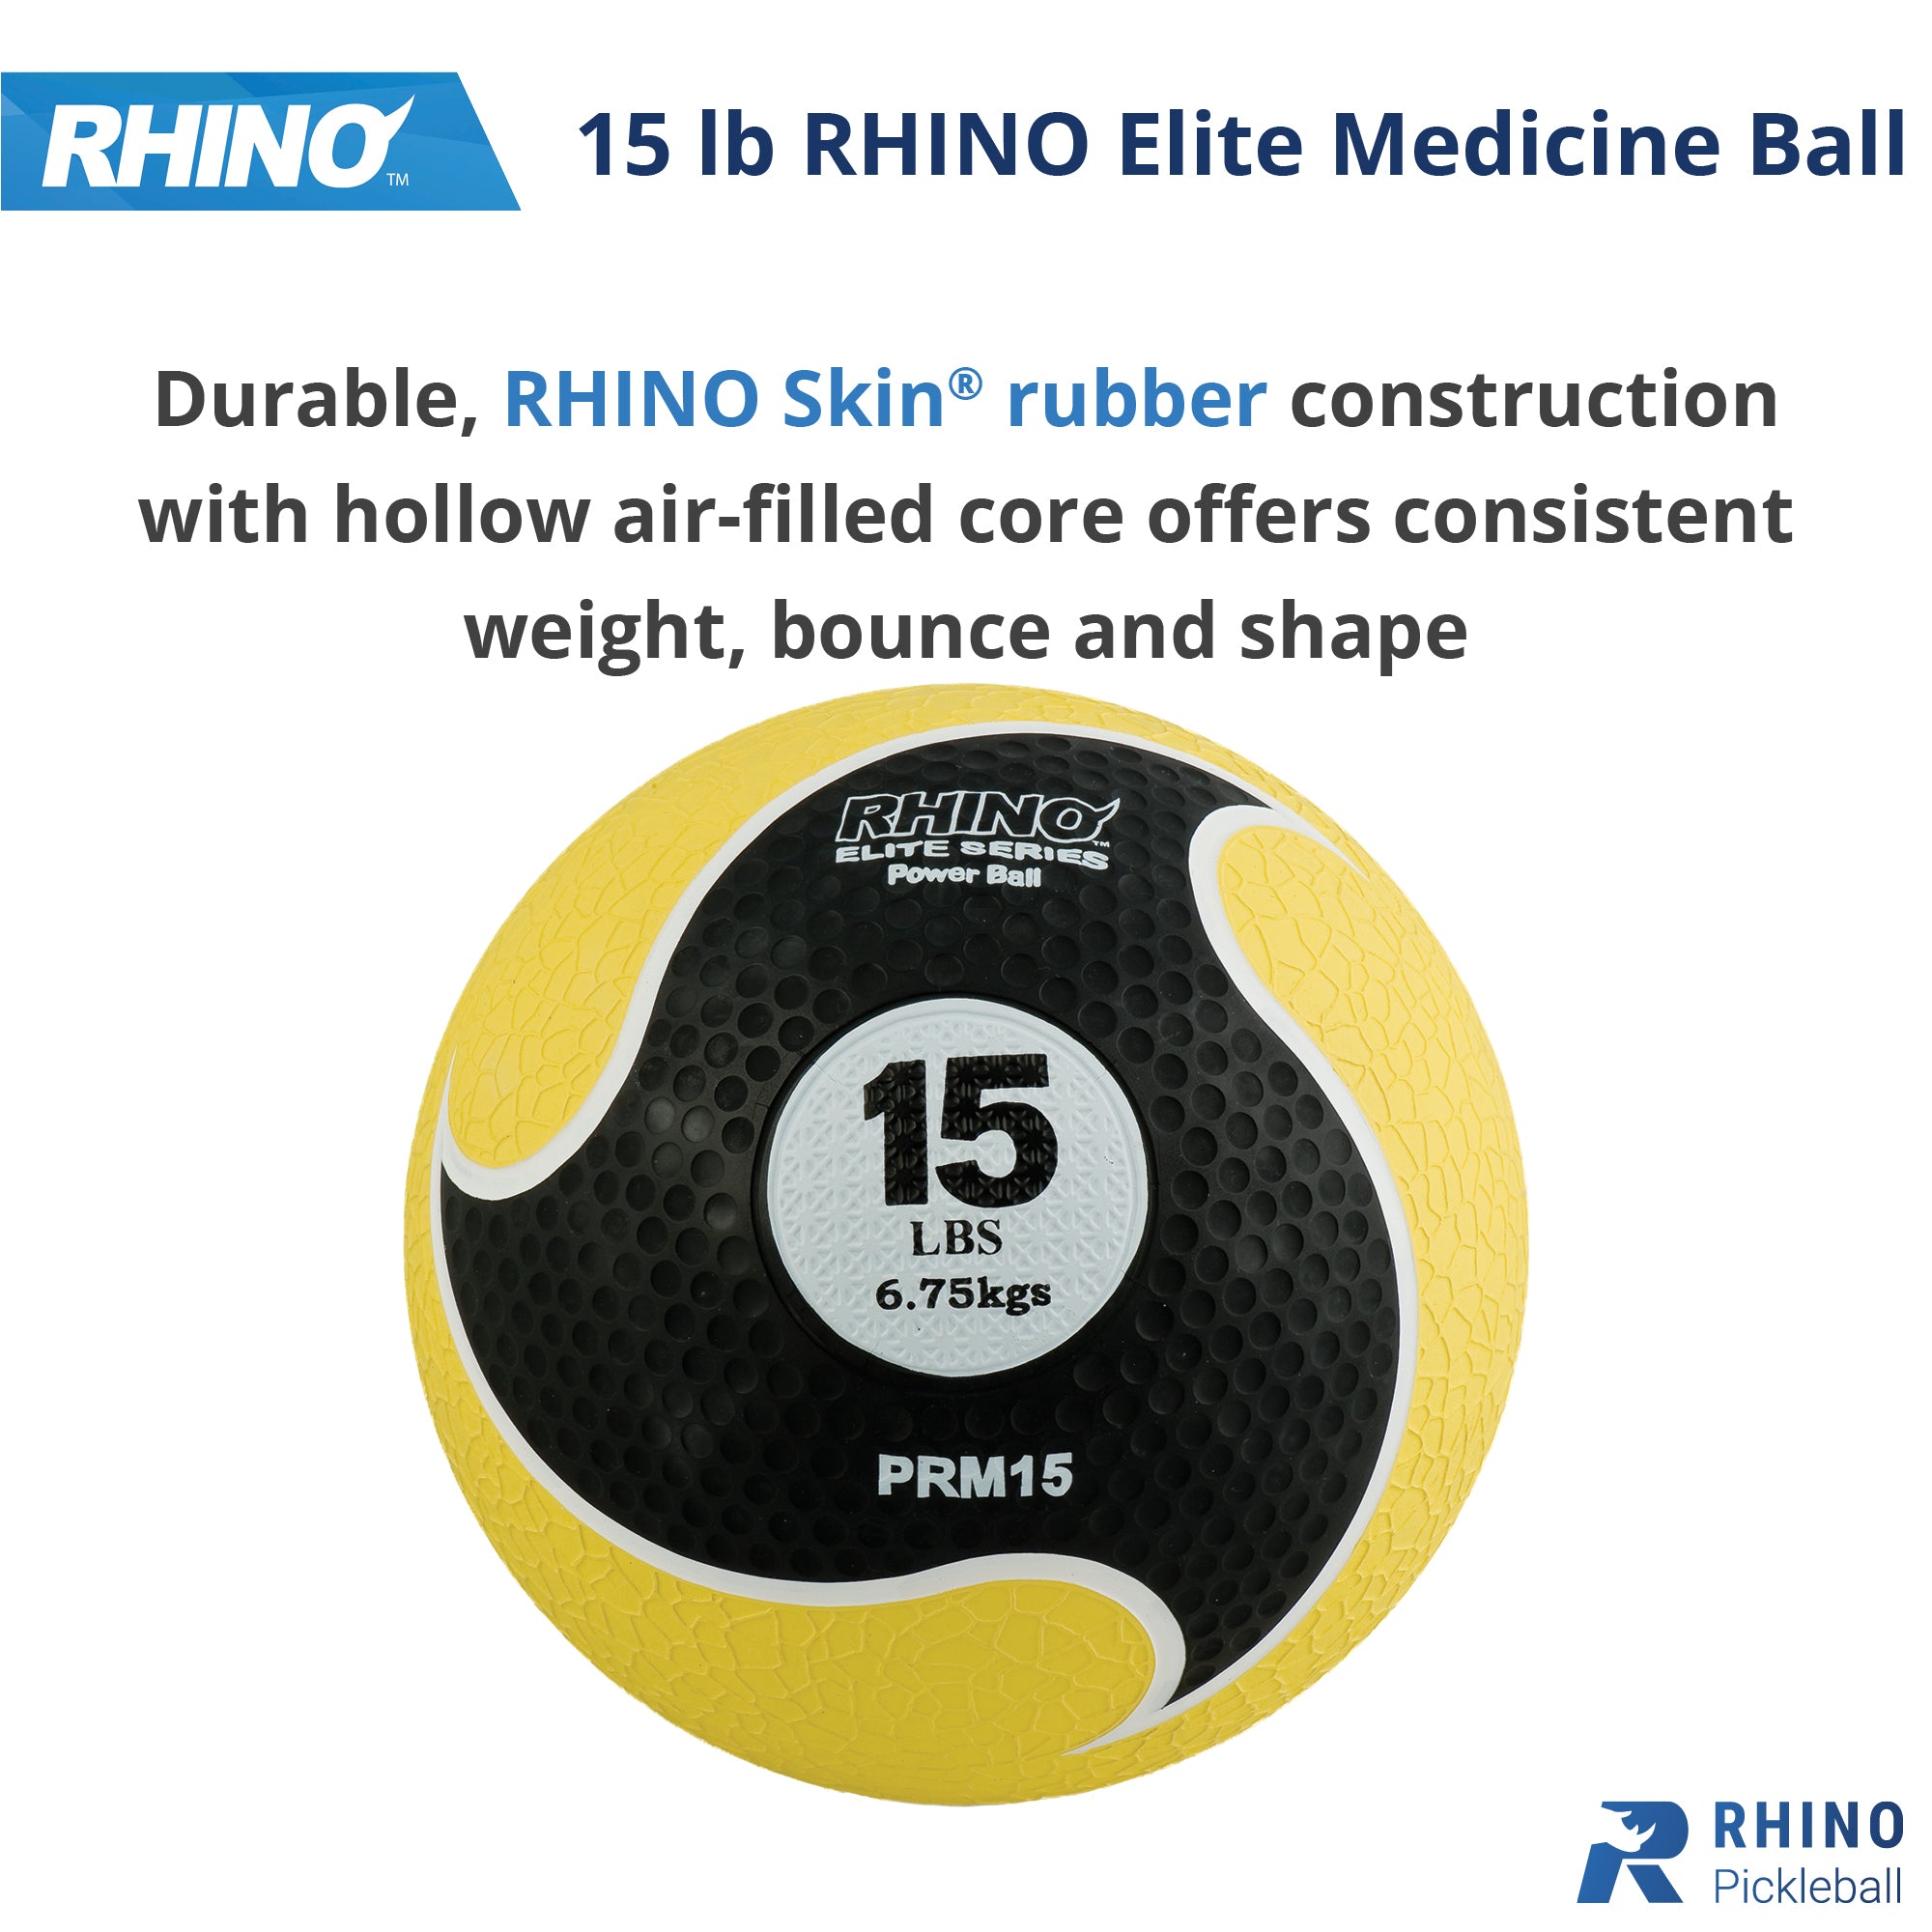 Rhino Elite Medicine Ball Series 15 lb RHINO __label:NEW! Agility fitness medicine ball physical therapy resistance Training